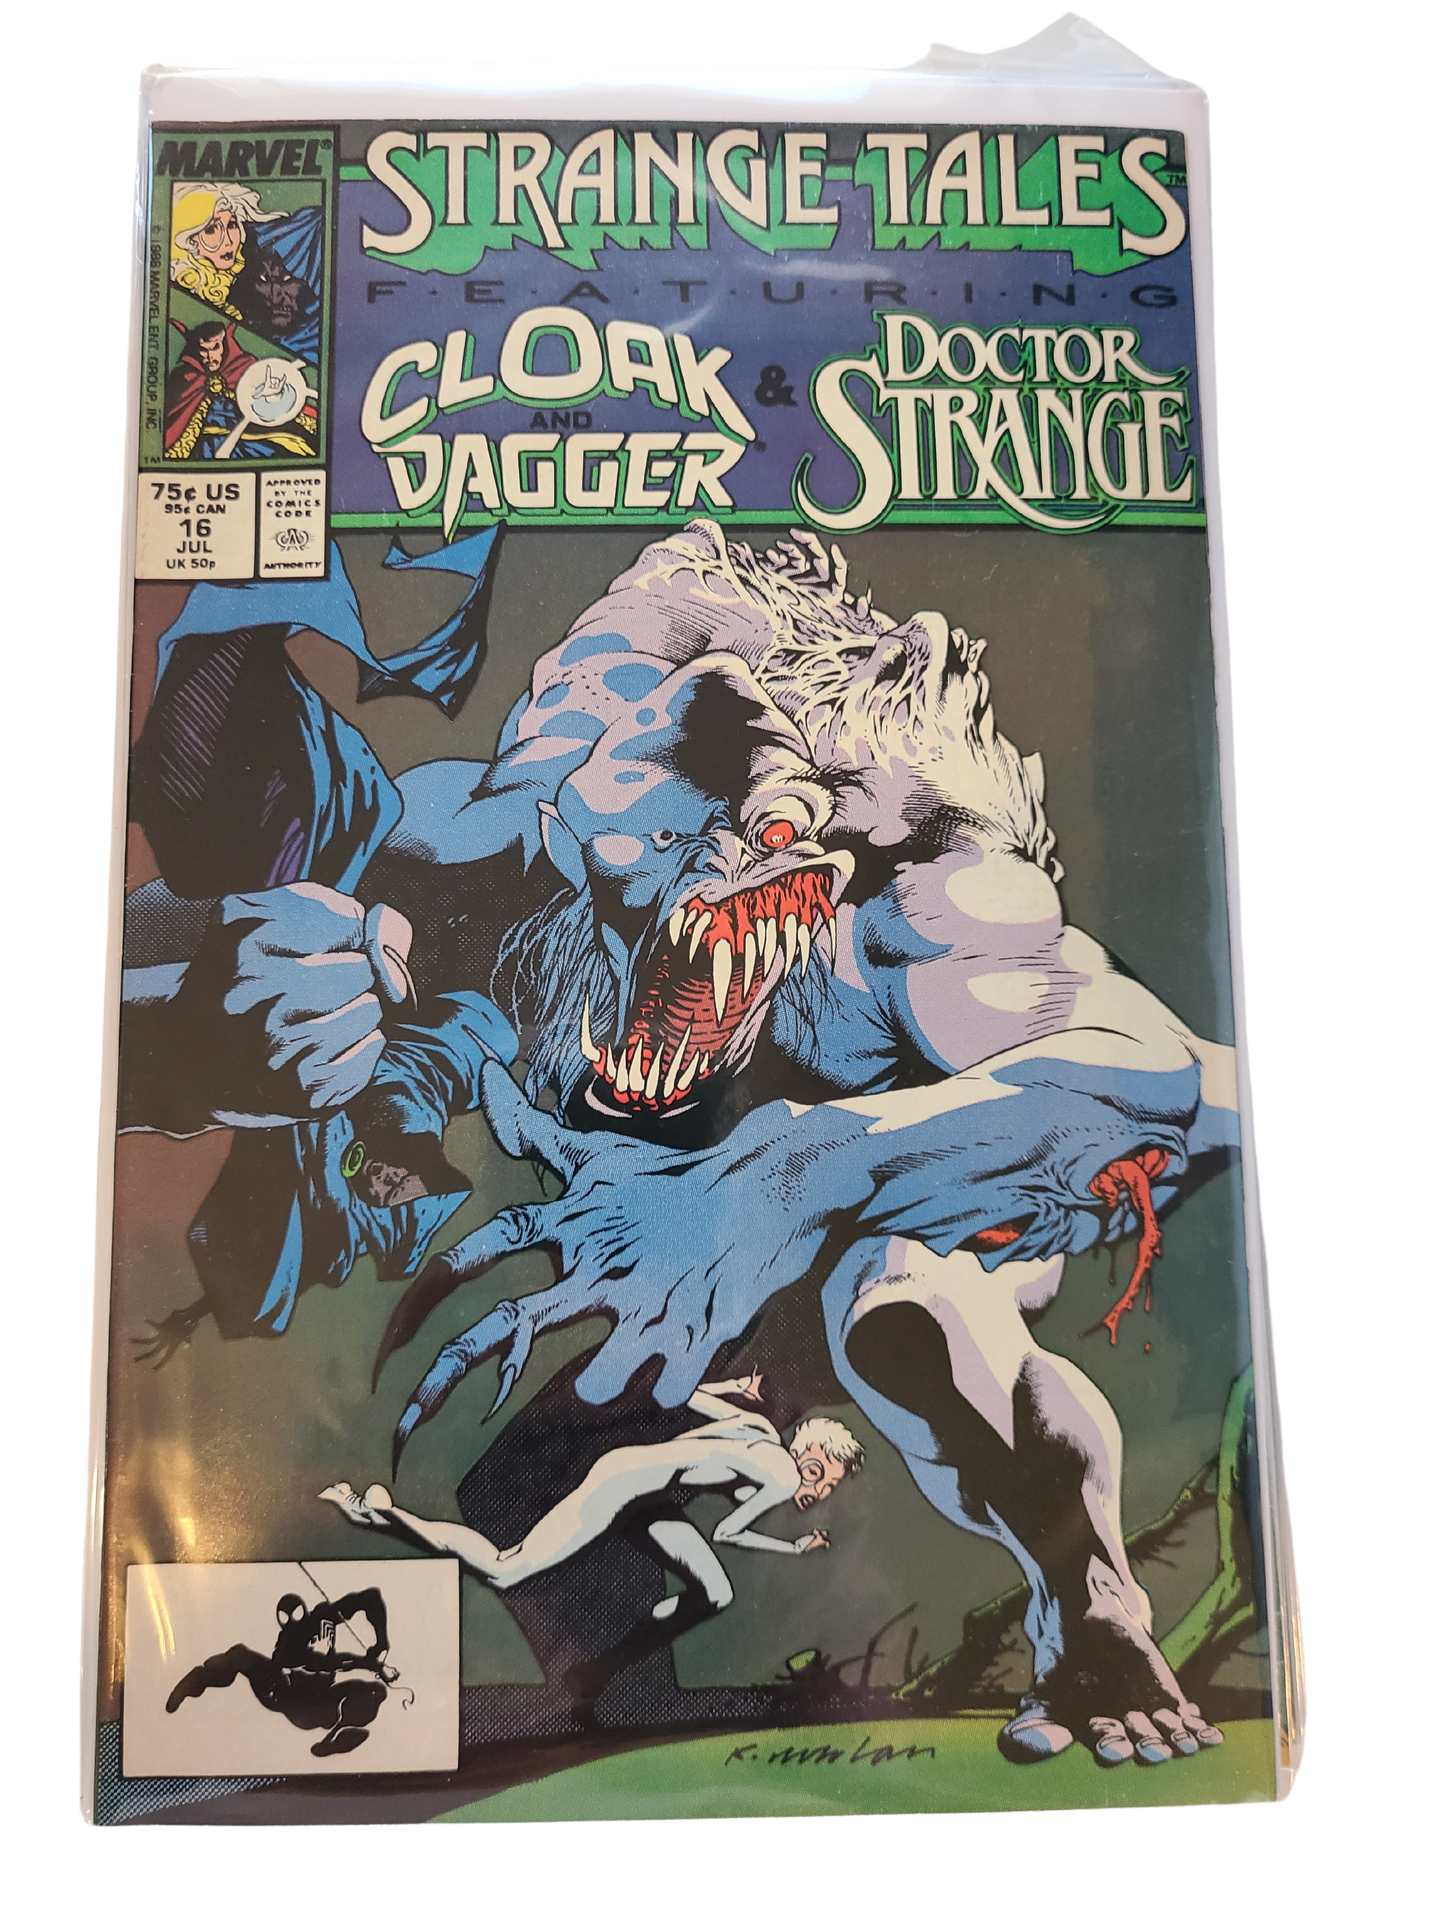 Strange Tales #16 Featuring Cloak and Dagger & Doctor Strange!